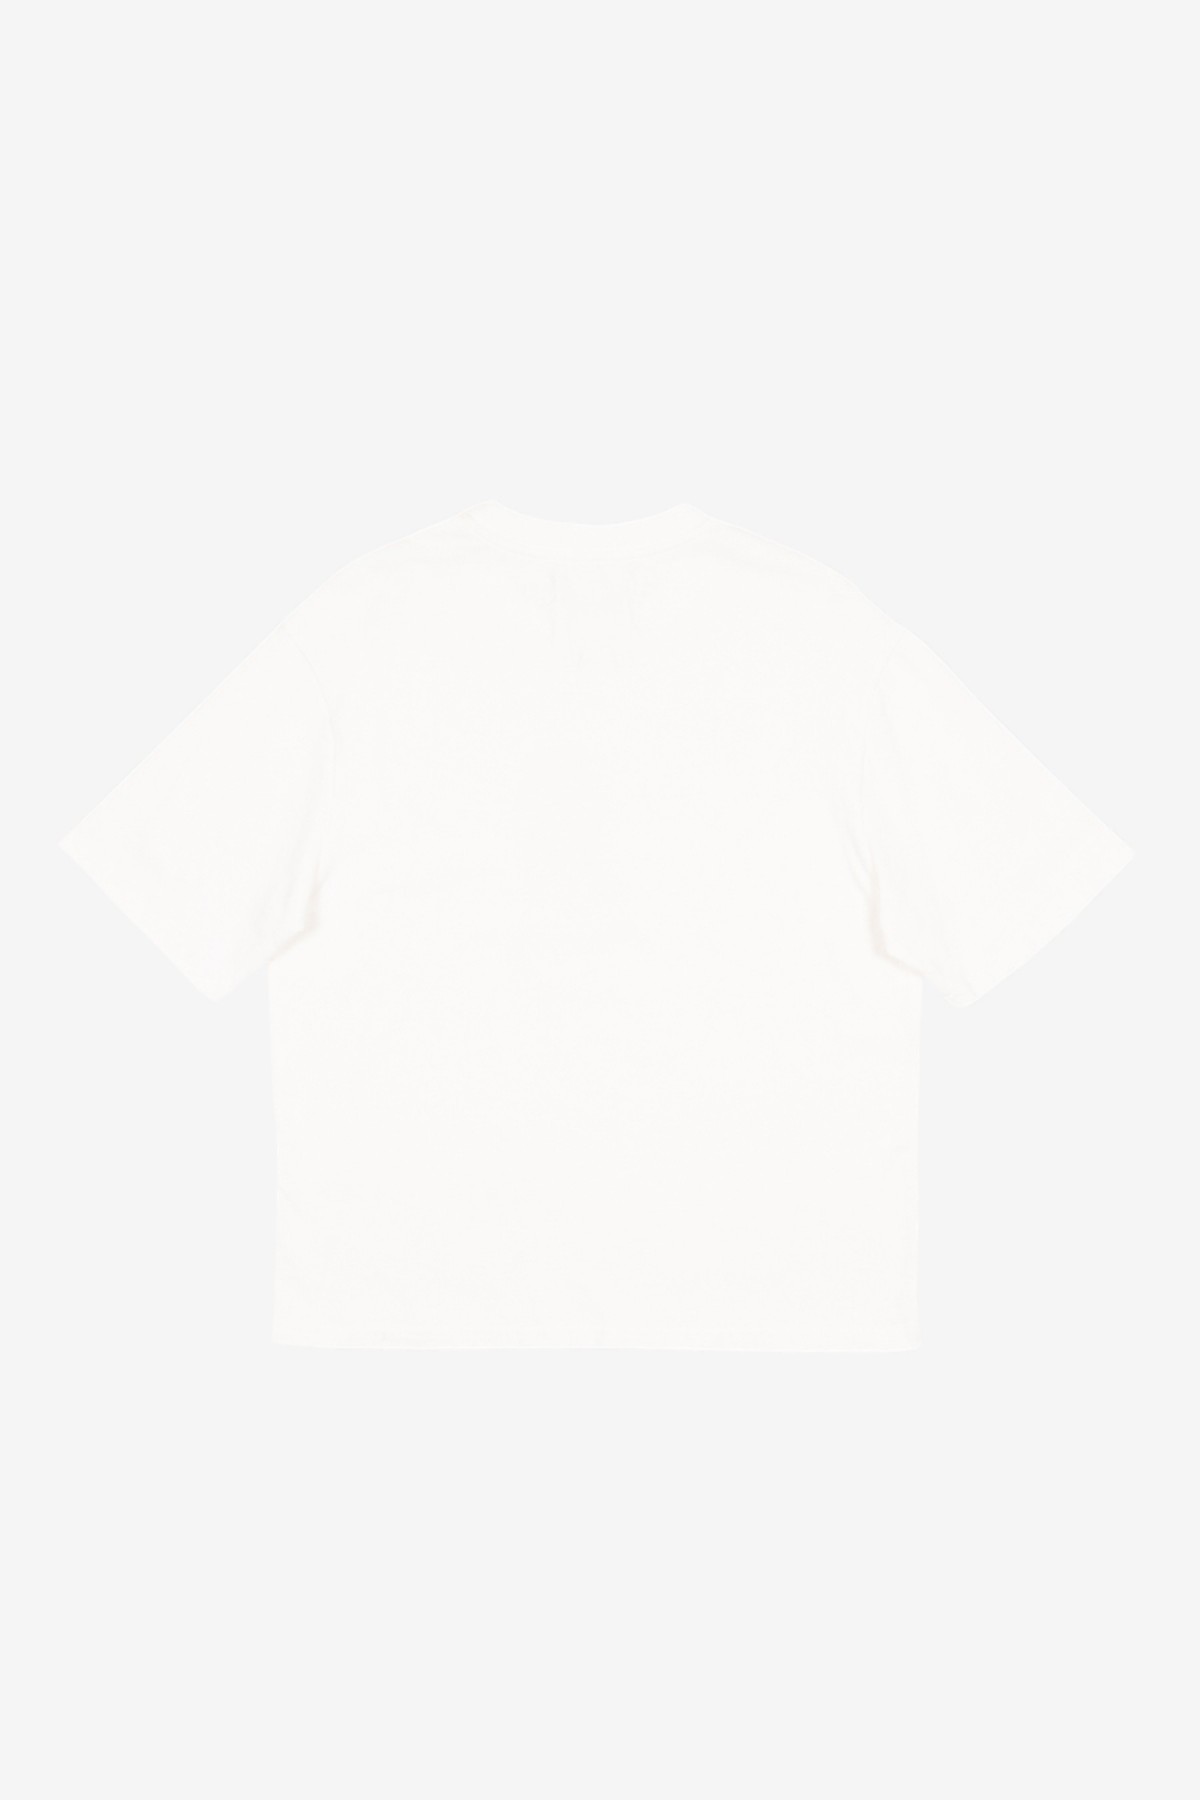 Bram's Fruit Beagle Aquarel T-Shirt in White